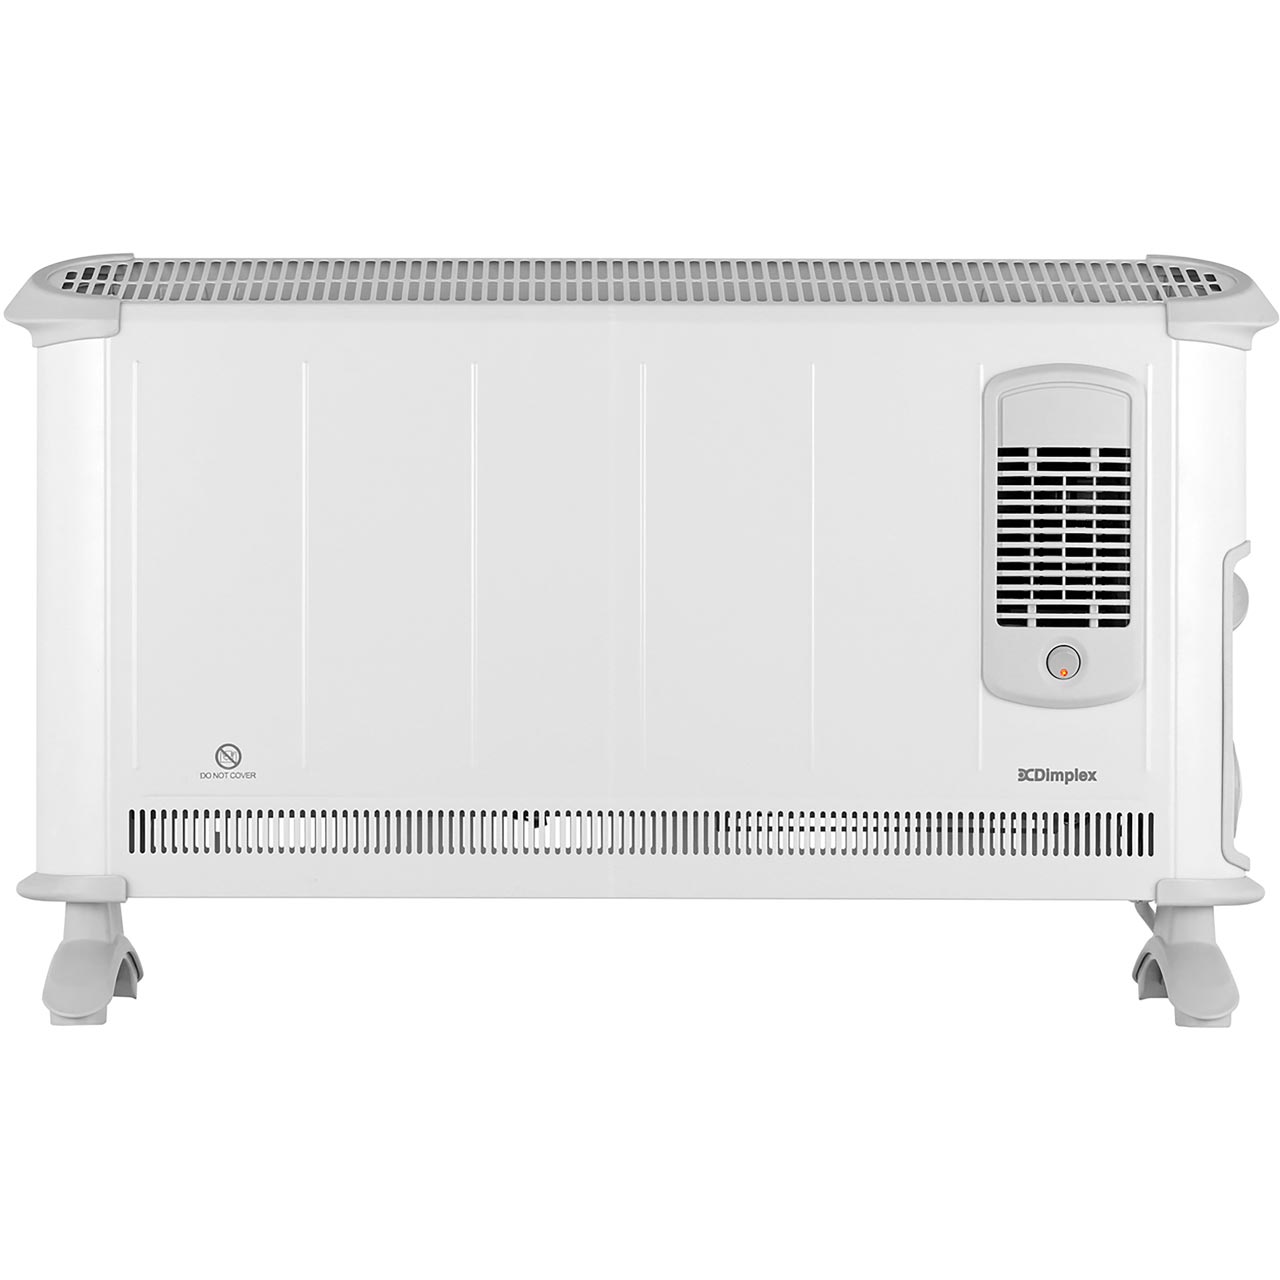 Dimplex 403TSFTie Convector Heater 3000W Review